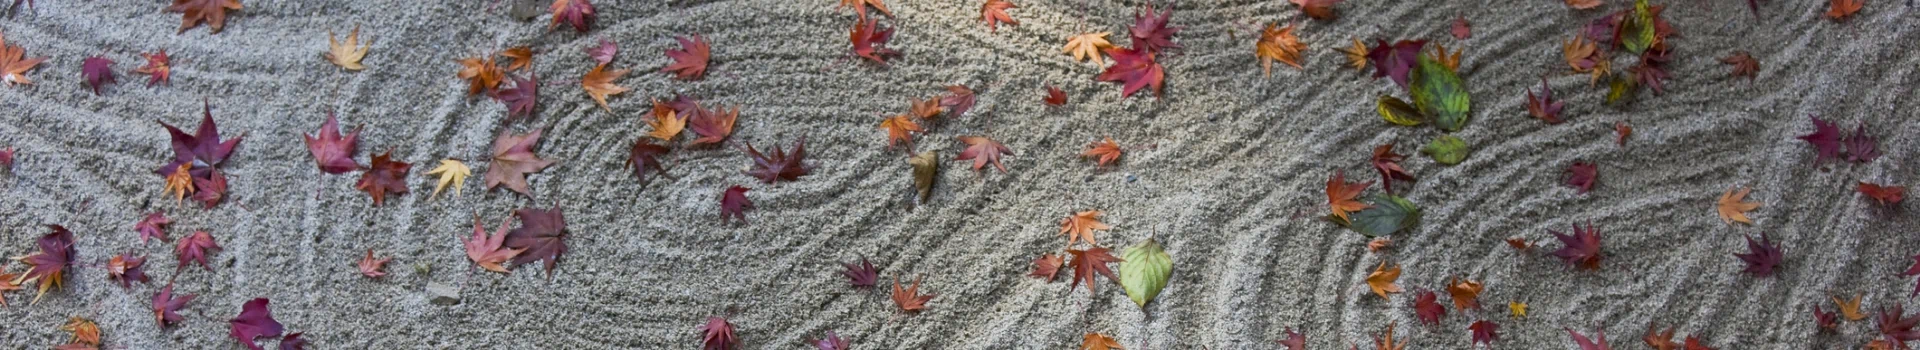 Jesienne liście na piasku